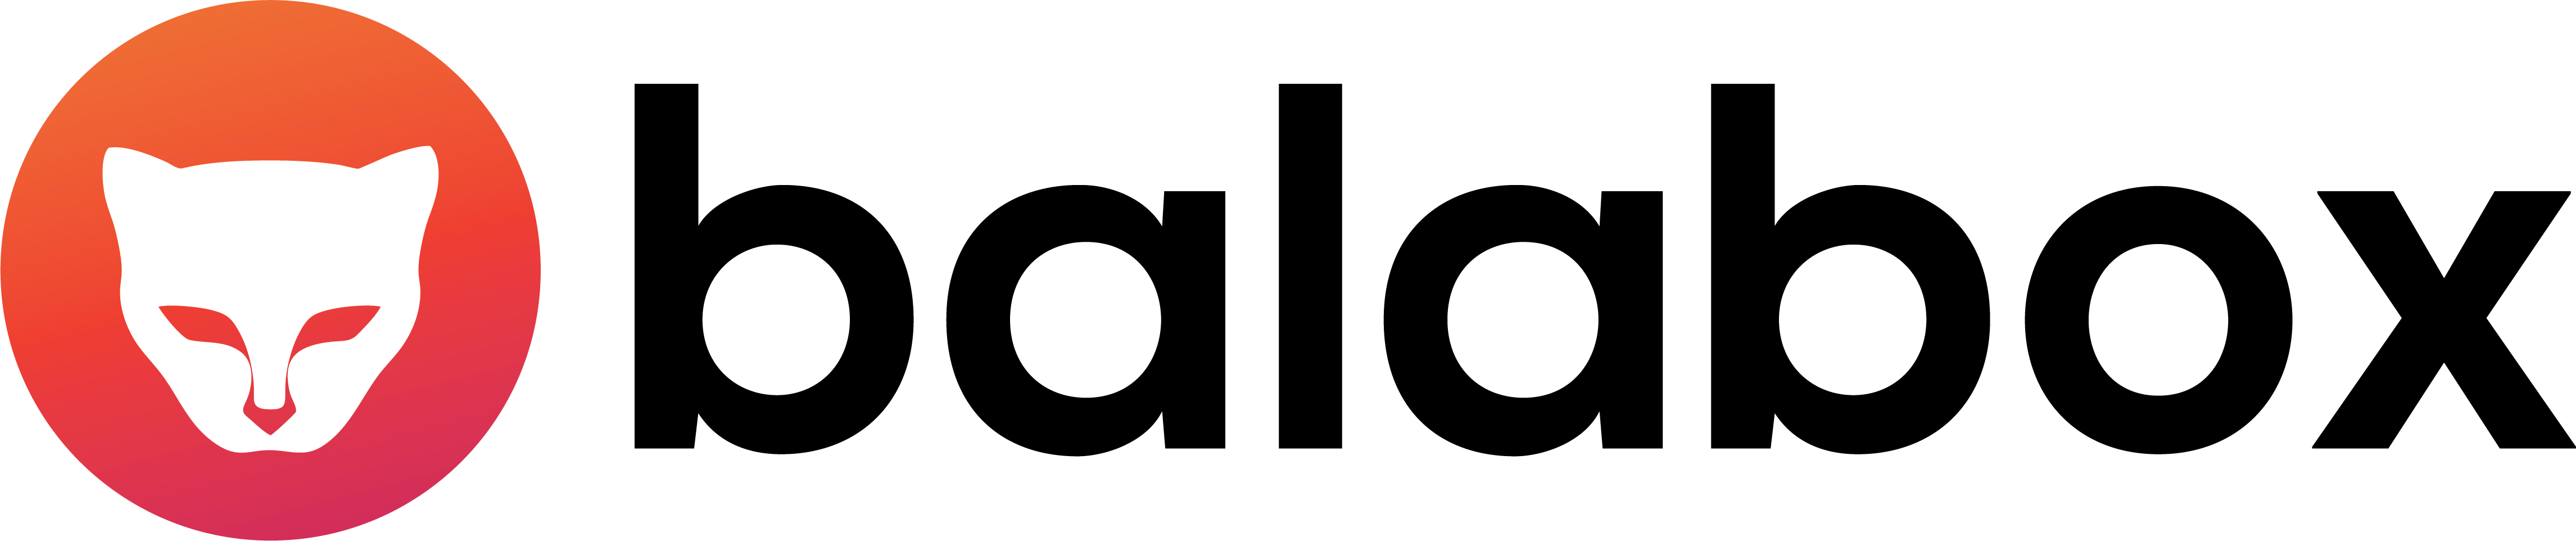 Balabox - Agencia Digital